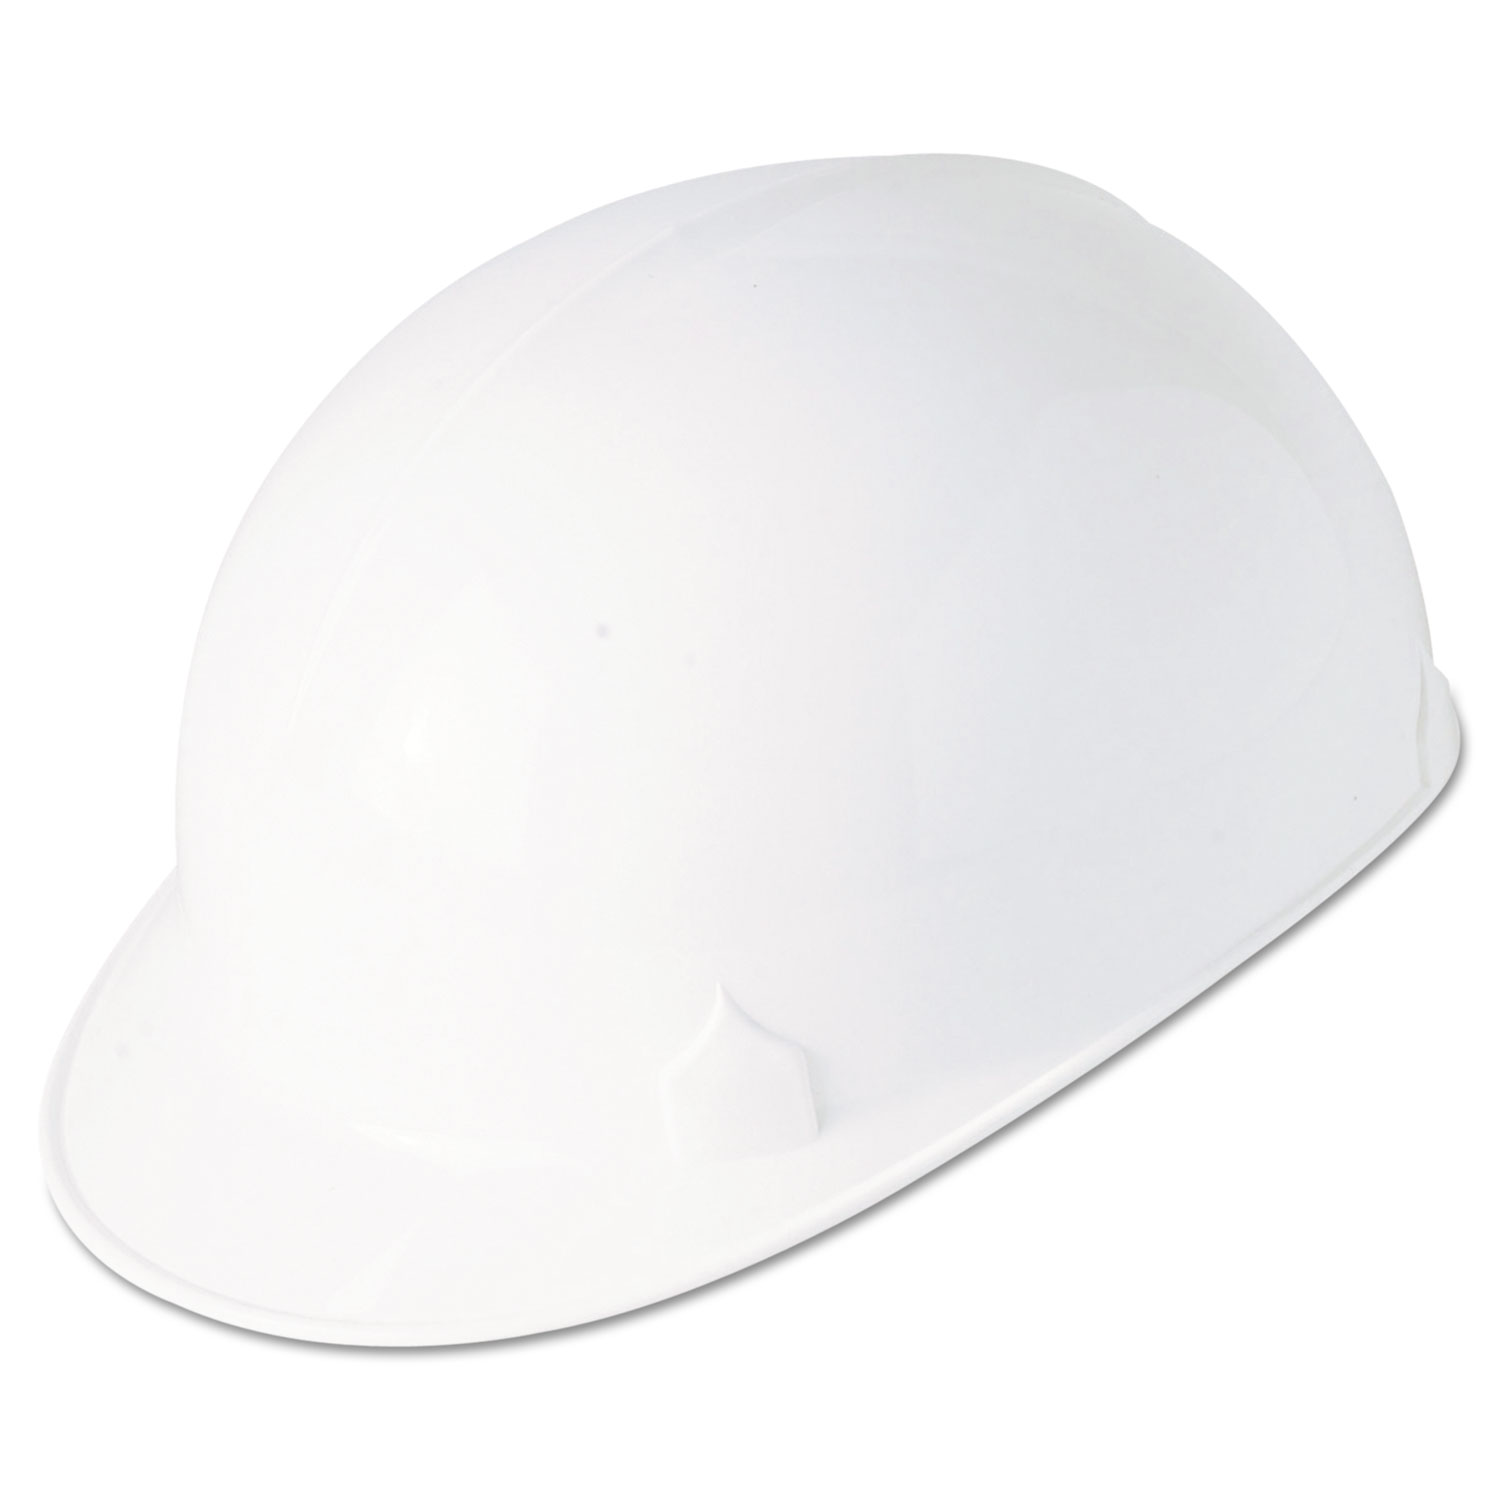 BC 100 Bump-Cap Hard Hat, White